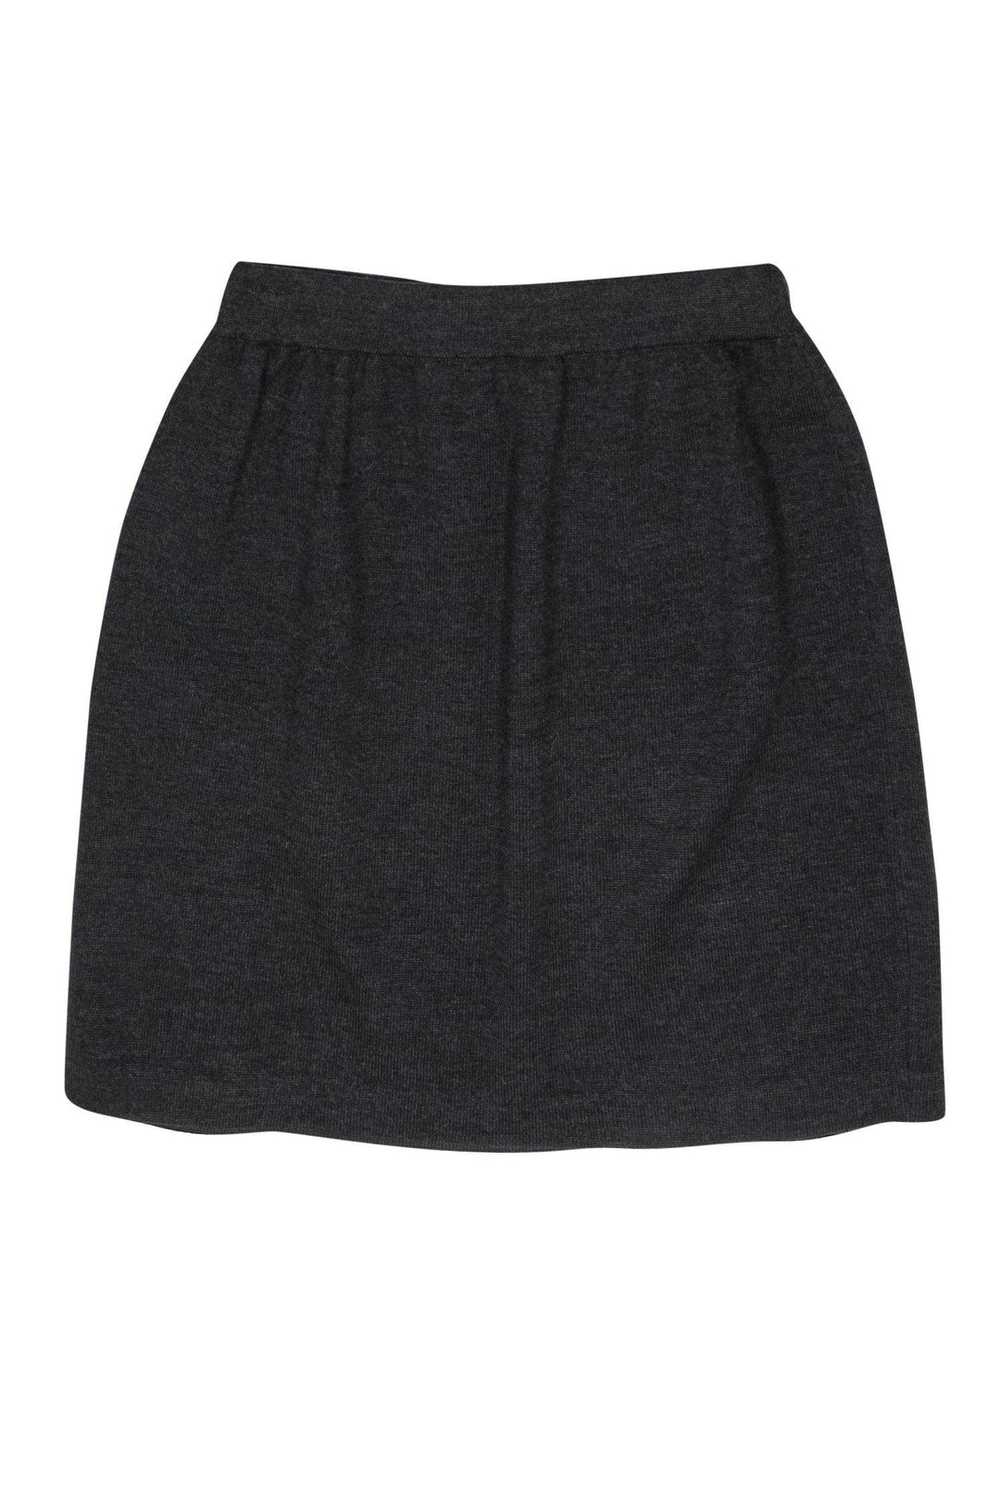 St. John Collection - Charcoal Grey Knit Skirt Sz… - image 2